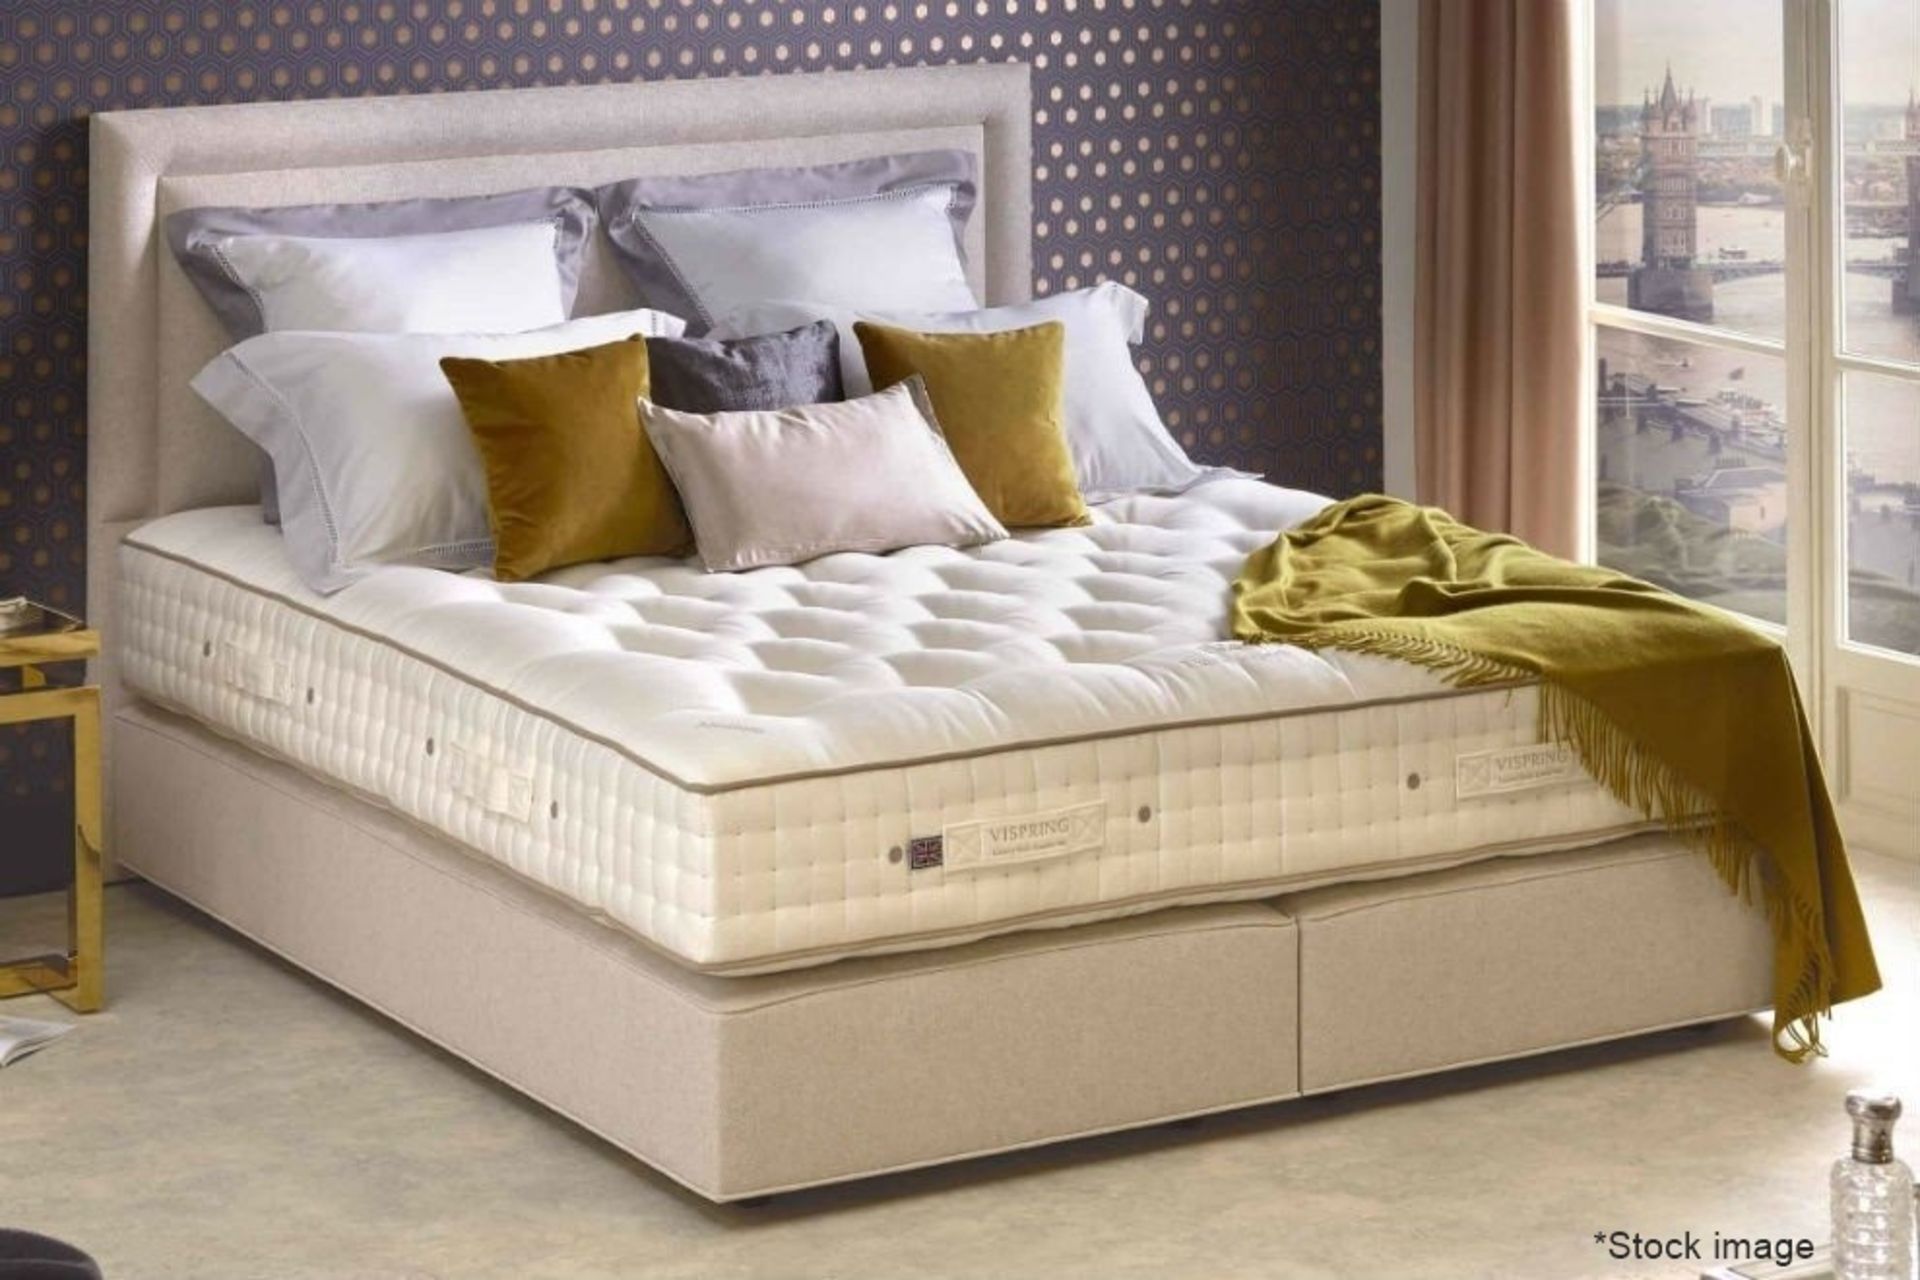 1 x VISPRING 'Tiara Superb' Emperor Mattress With Sovereign Divan Bed Base - Original RRP £9,300